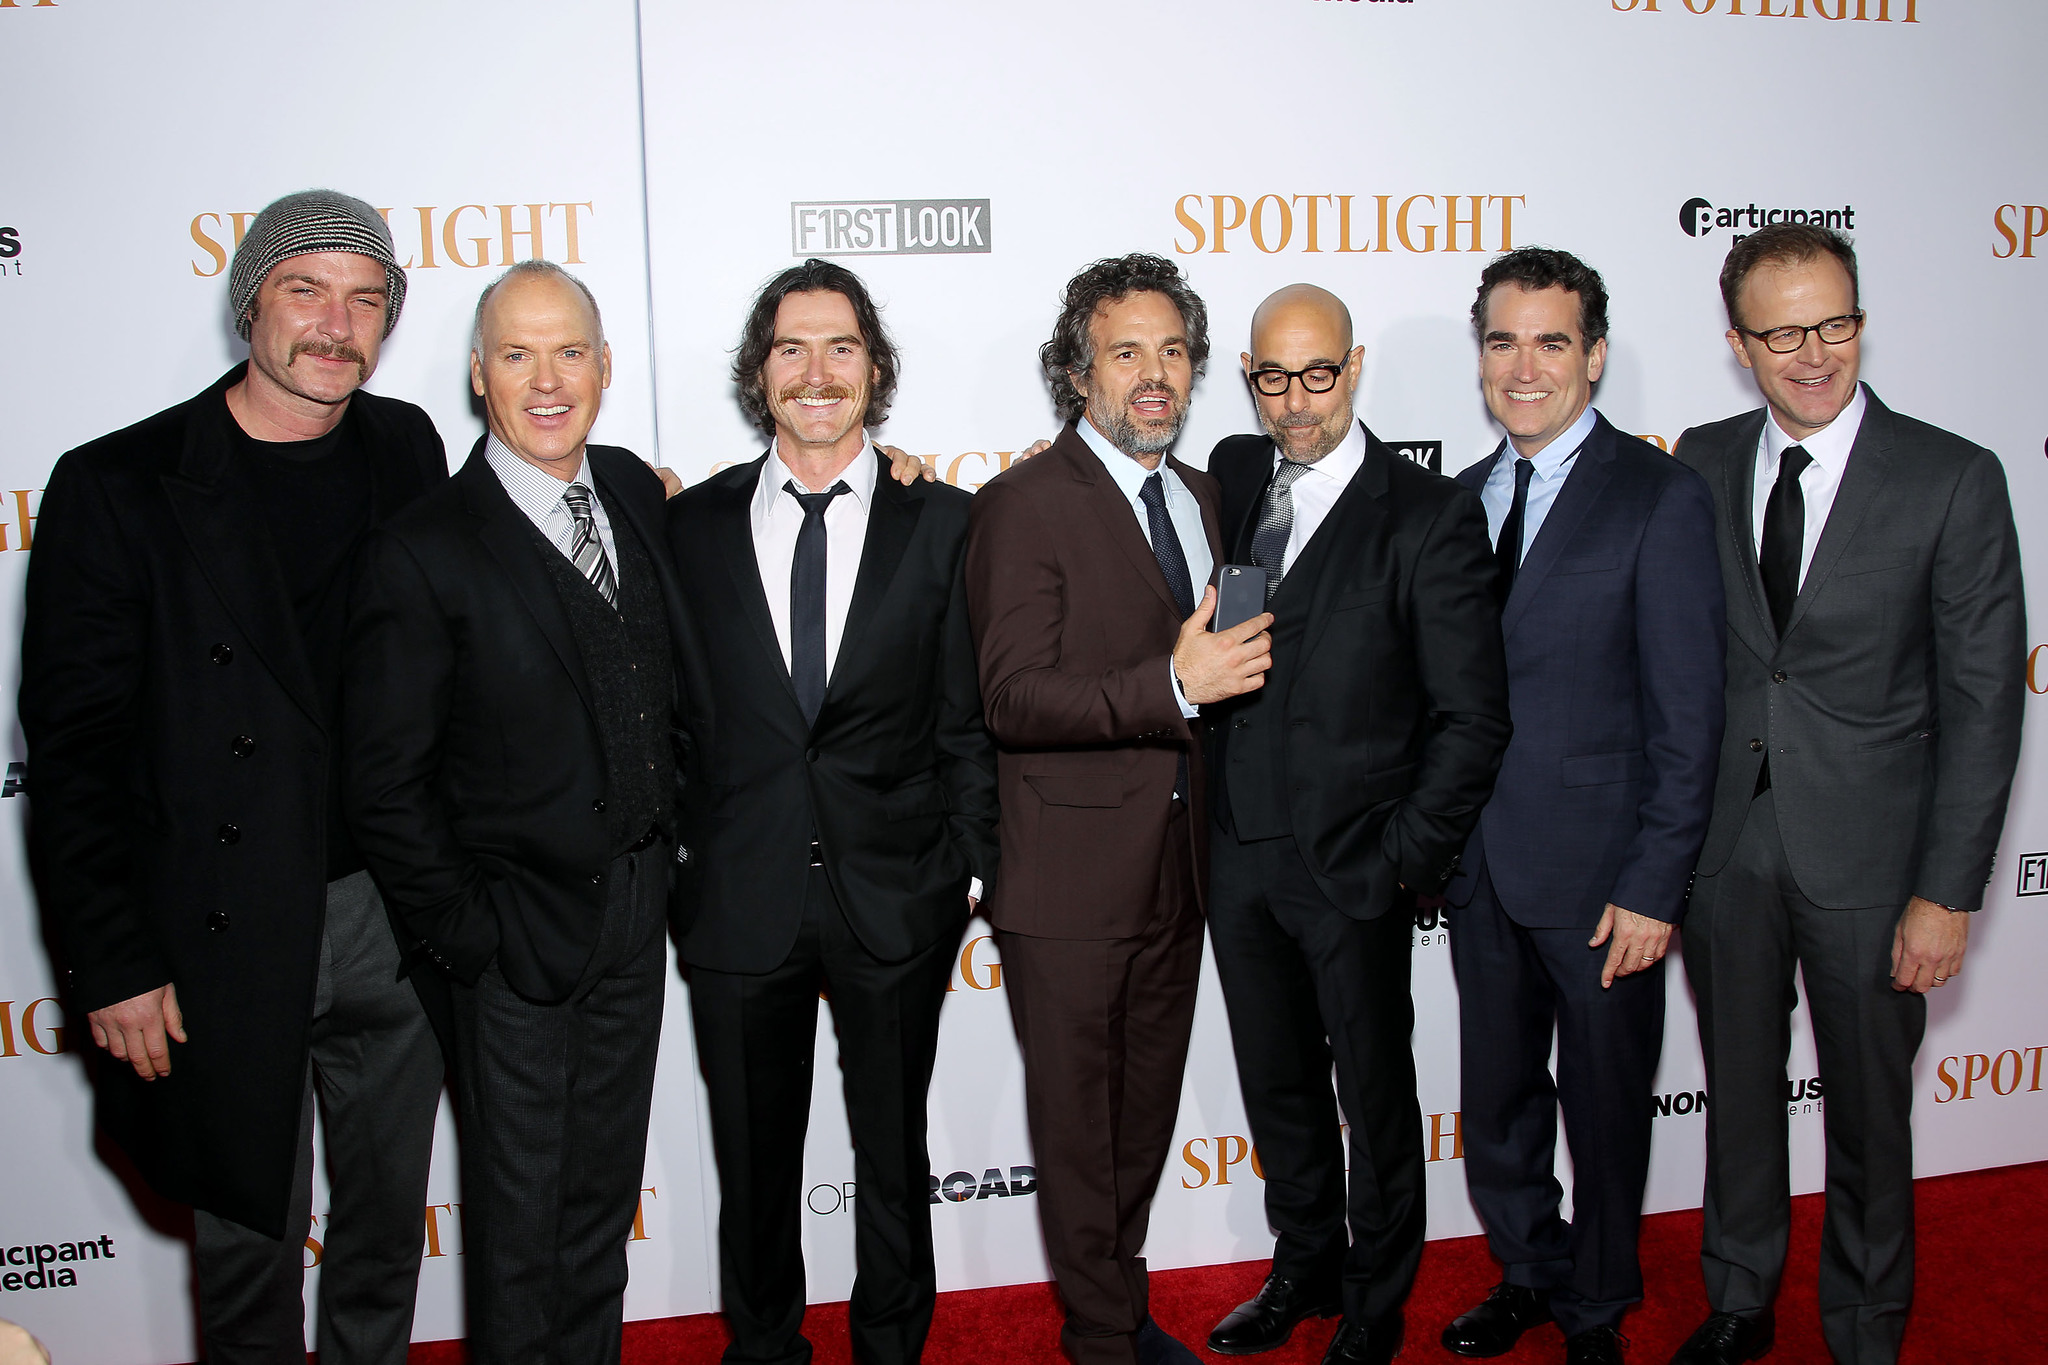 Michael Keaton, Liev Schreiber, Billy Crudup, Stanley Tucci, Brian d'Arcy James, Tom McCarthy and Mark Ruffalo at event of Sensacija (2015)